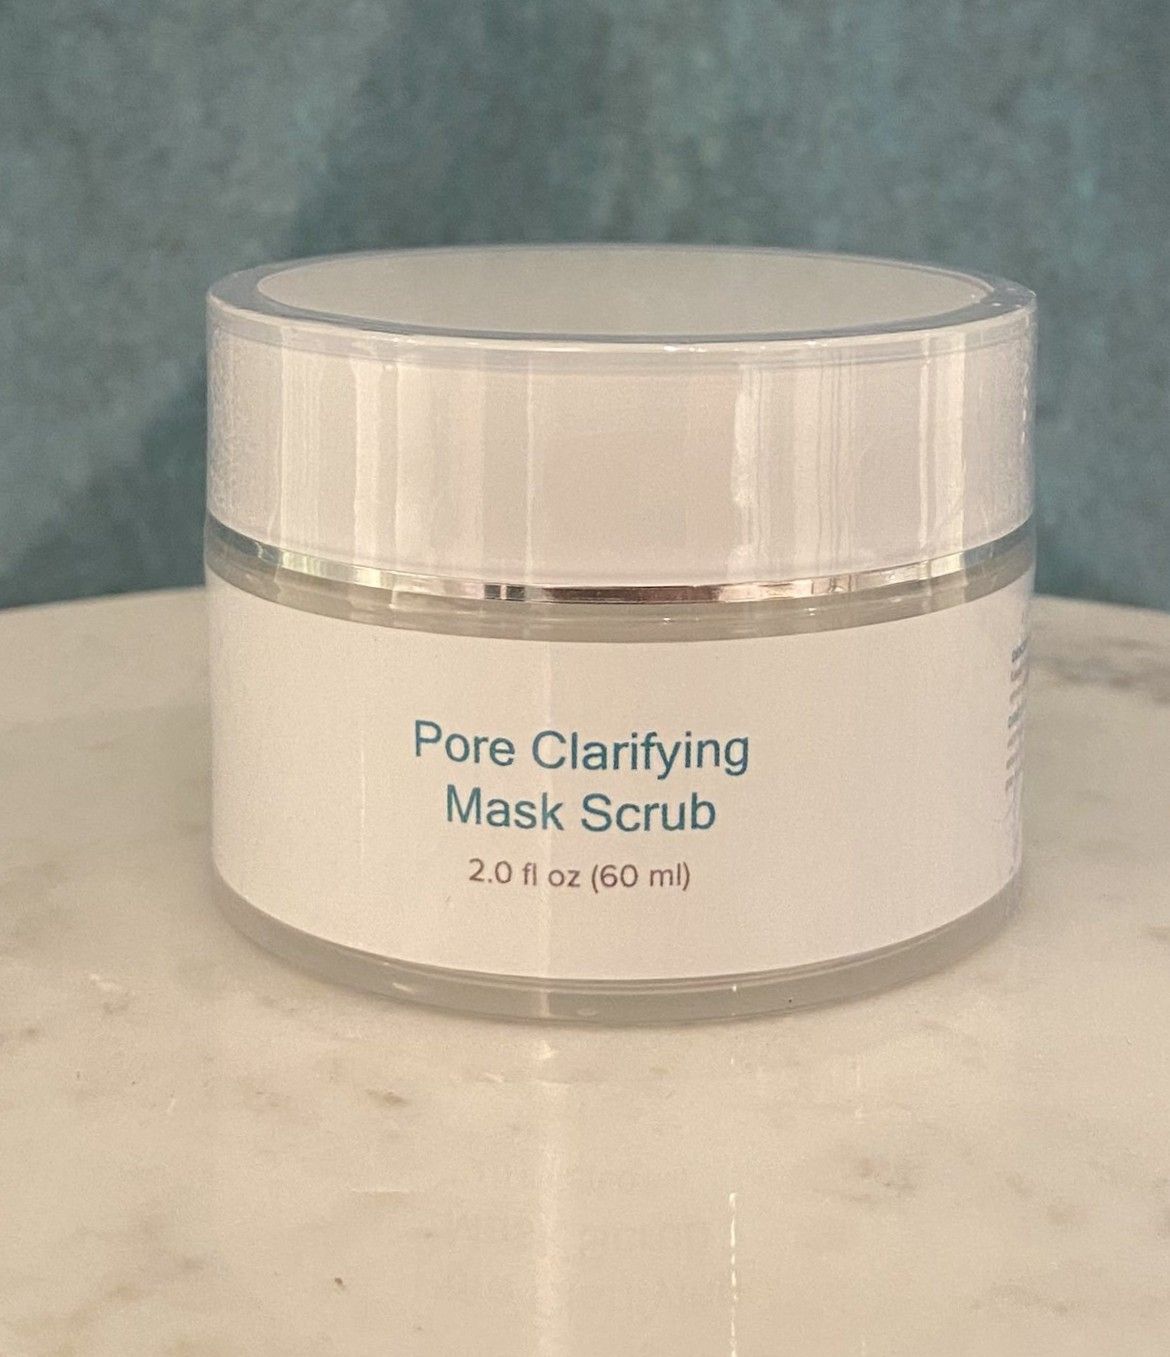 Pore Clarifying Mask Scrub